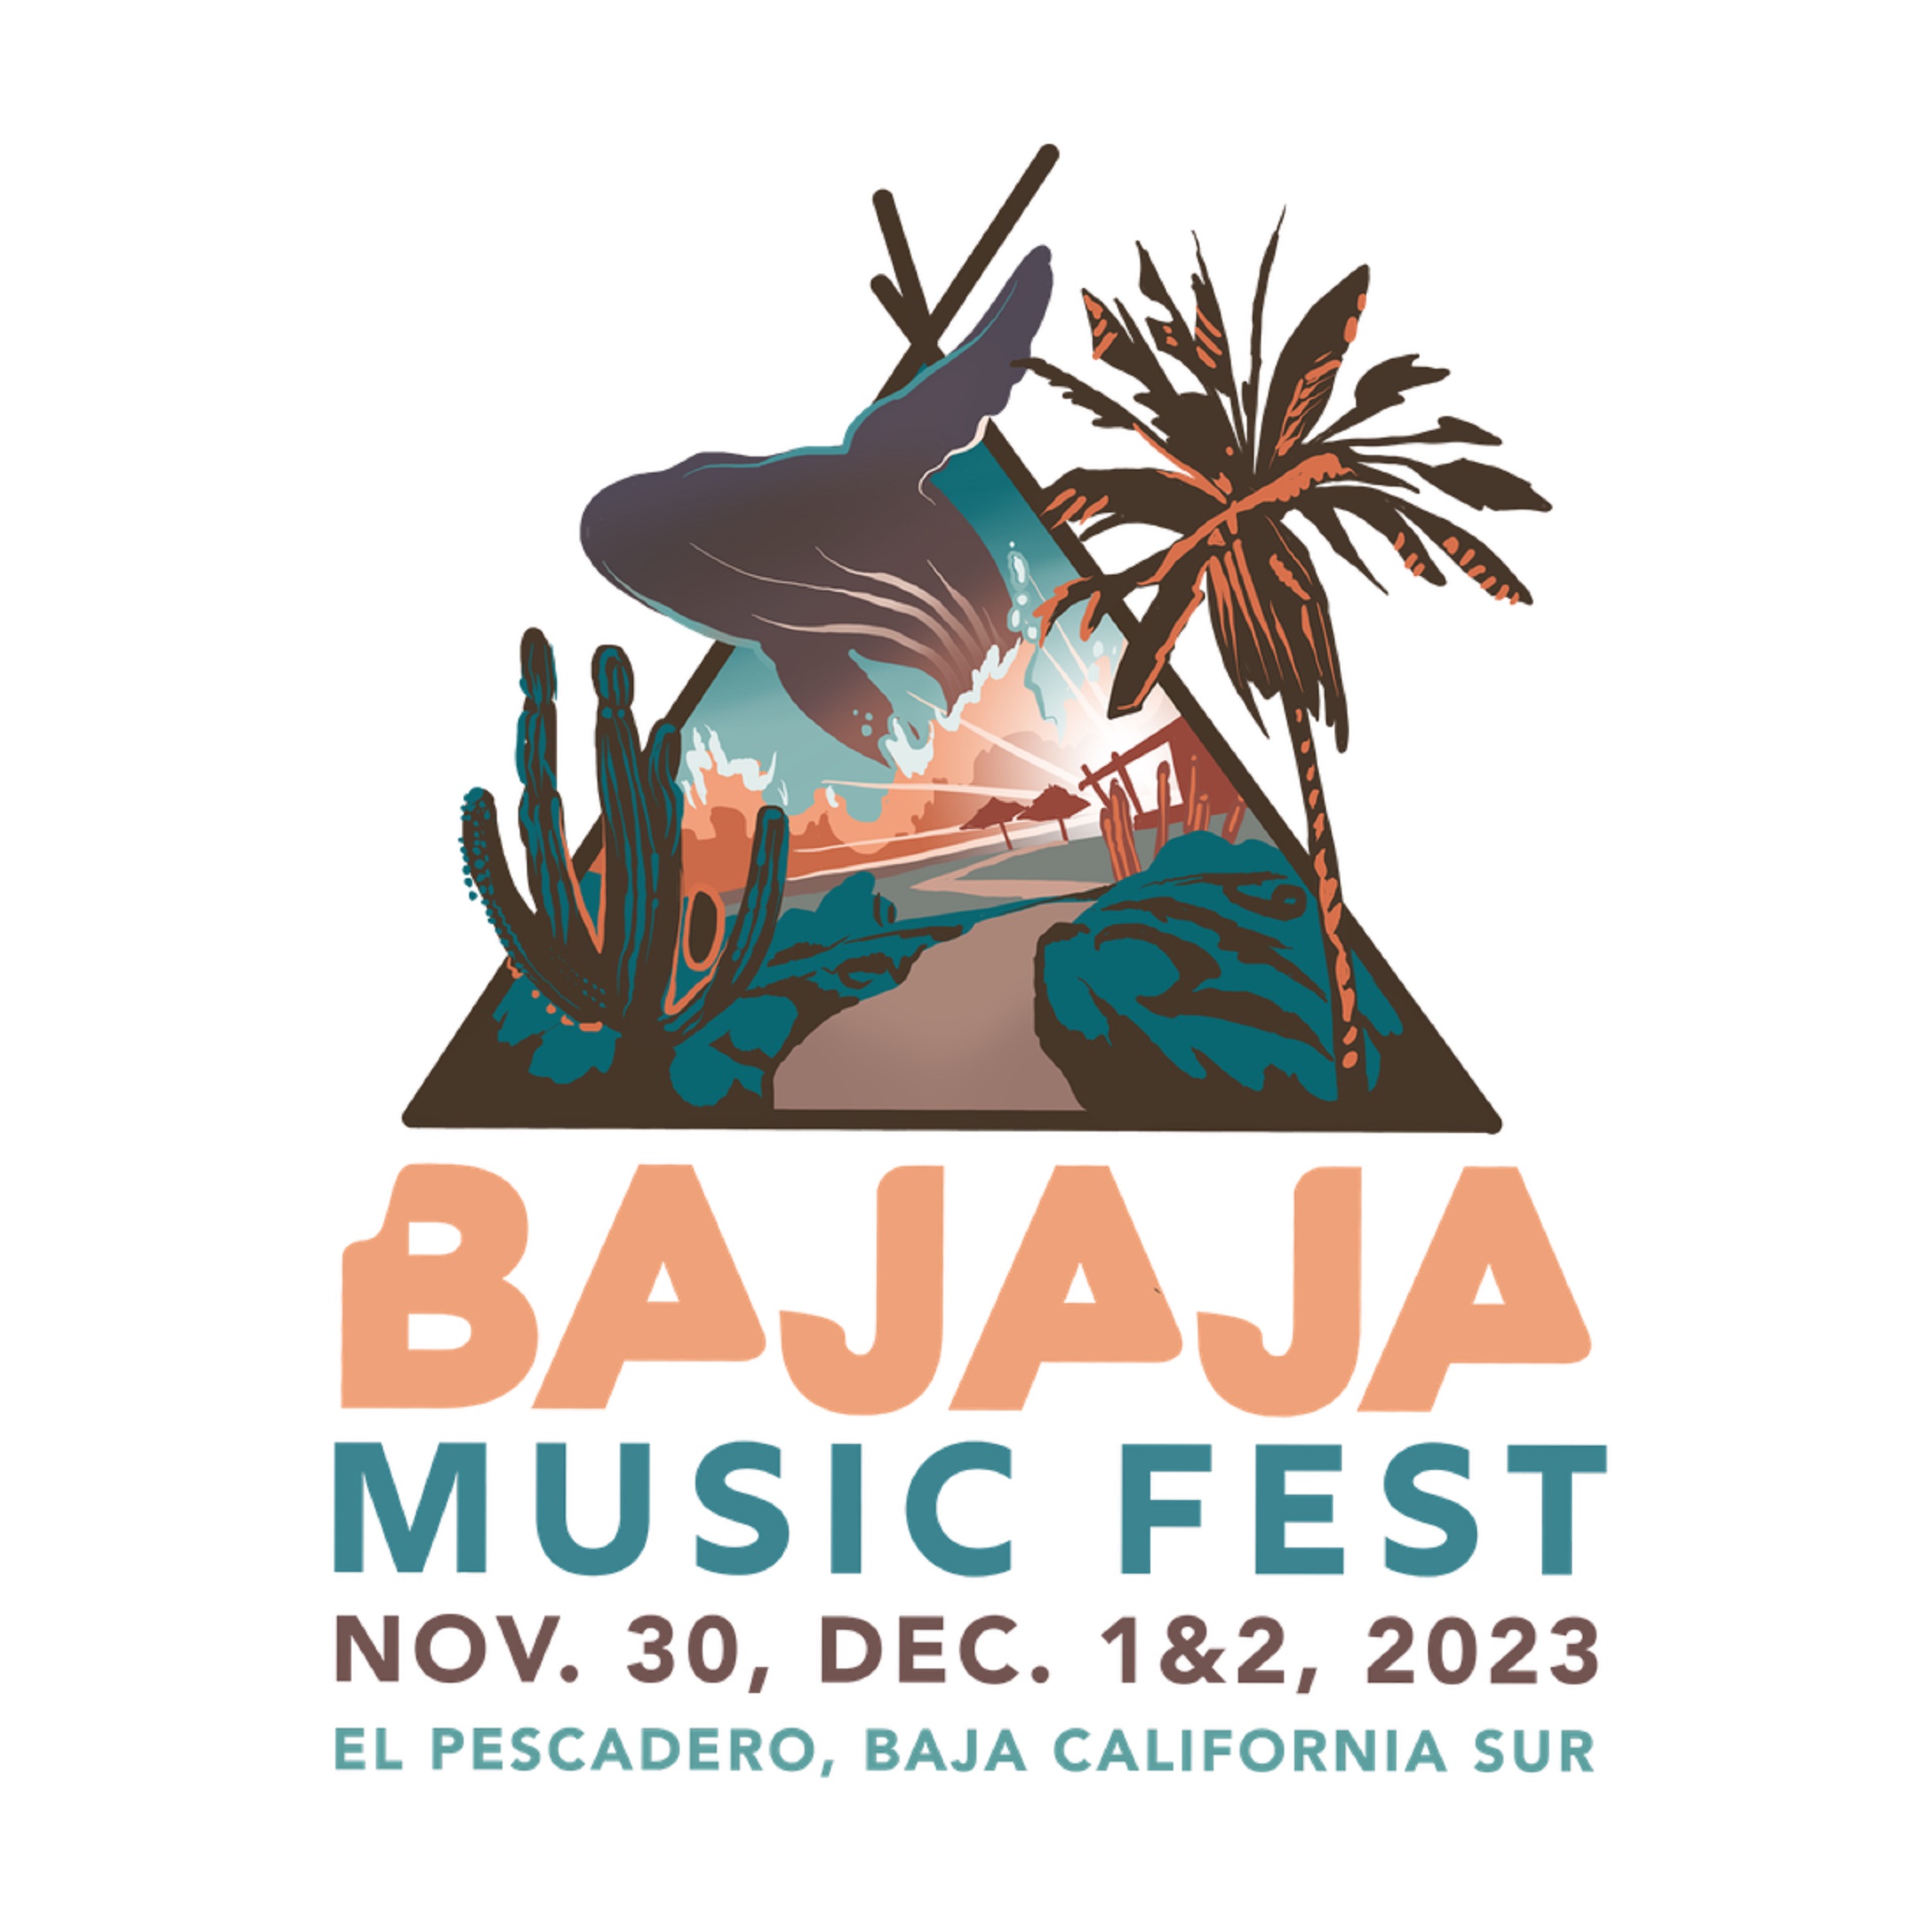 Bajaja Music Fest Announces Innagural 3-Day Festival in Baja California Sur with Headliners The New Mastersounds and John Medeski, DJ Logic & Friends & More